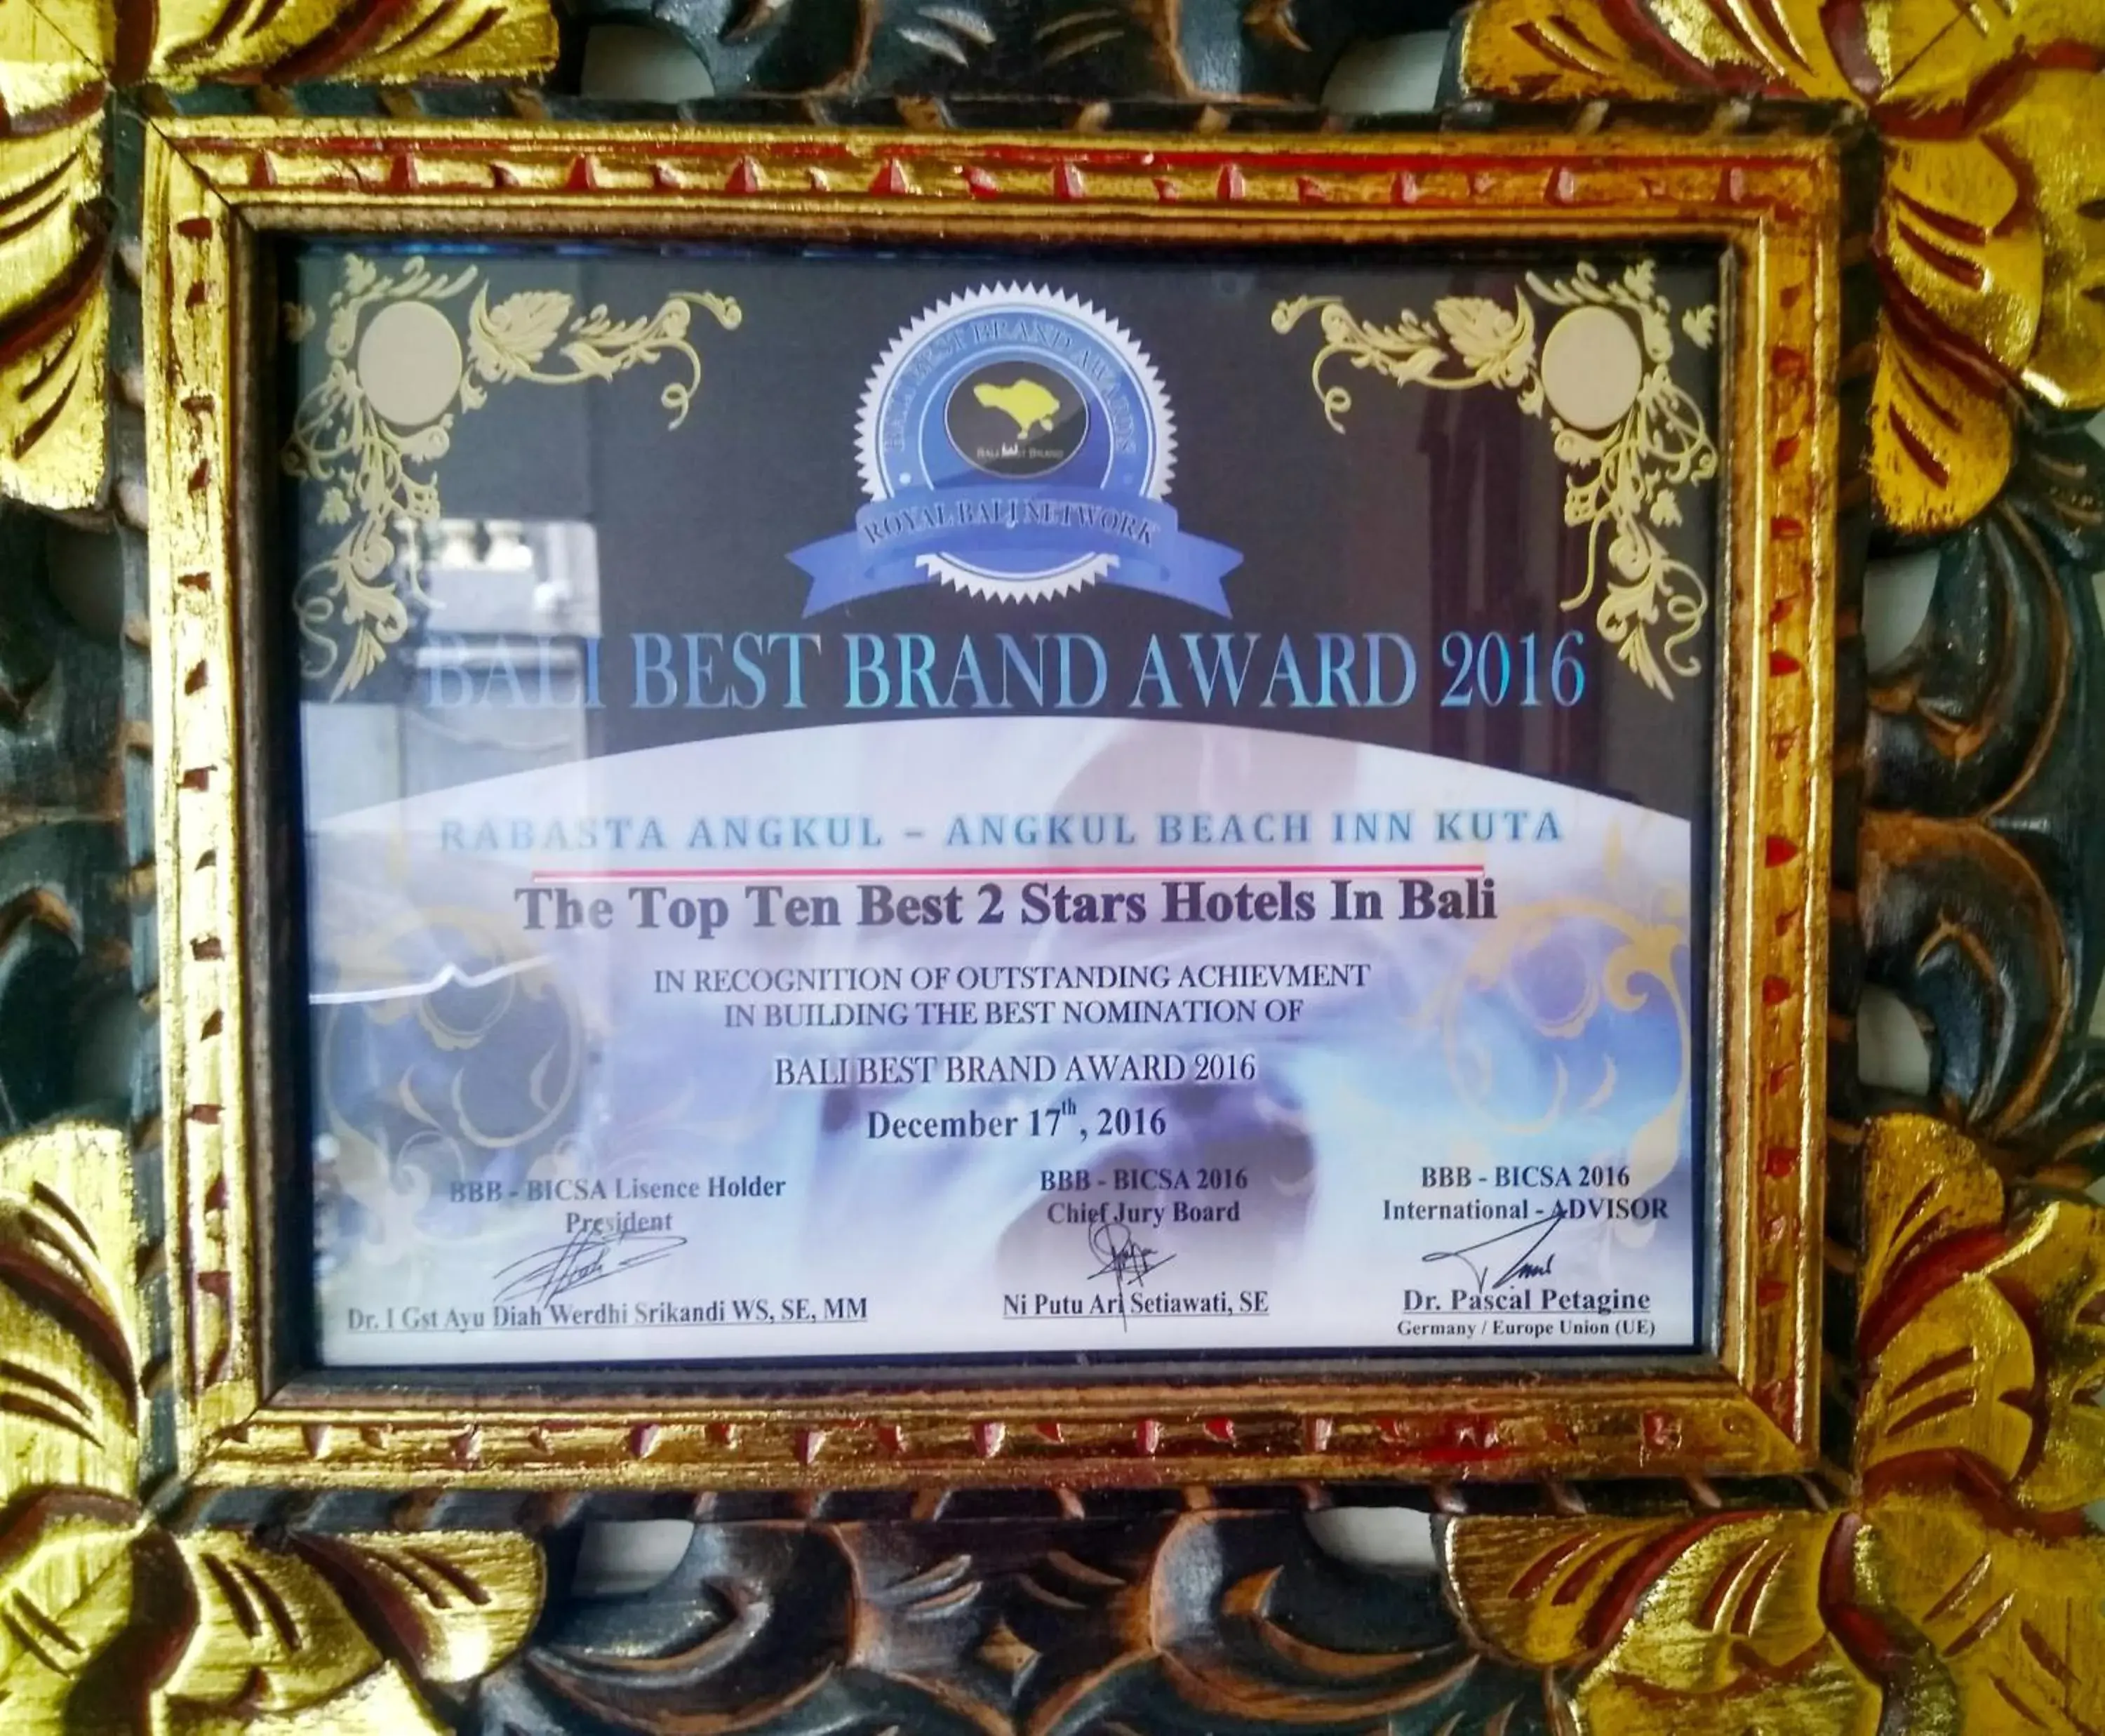 Certificate/Award in Angkul Angkul Beach inn Kuta